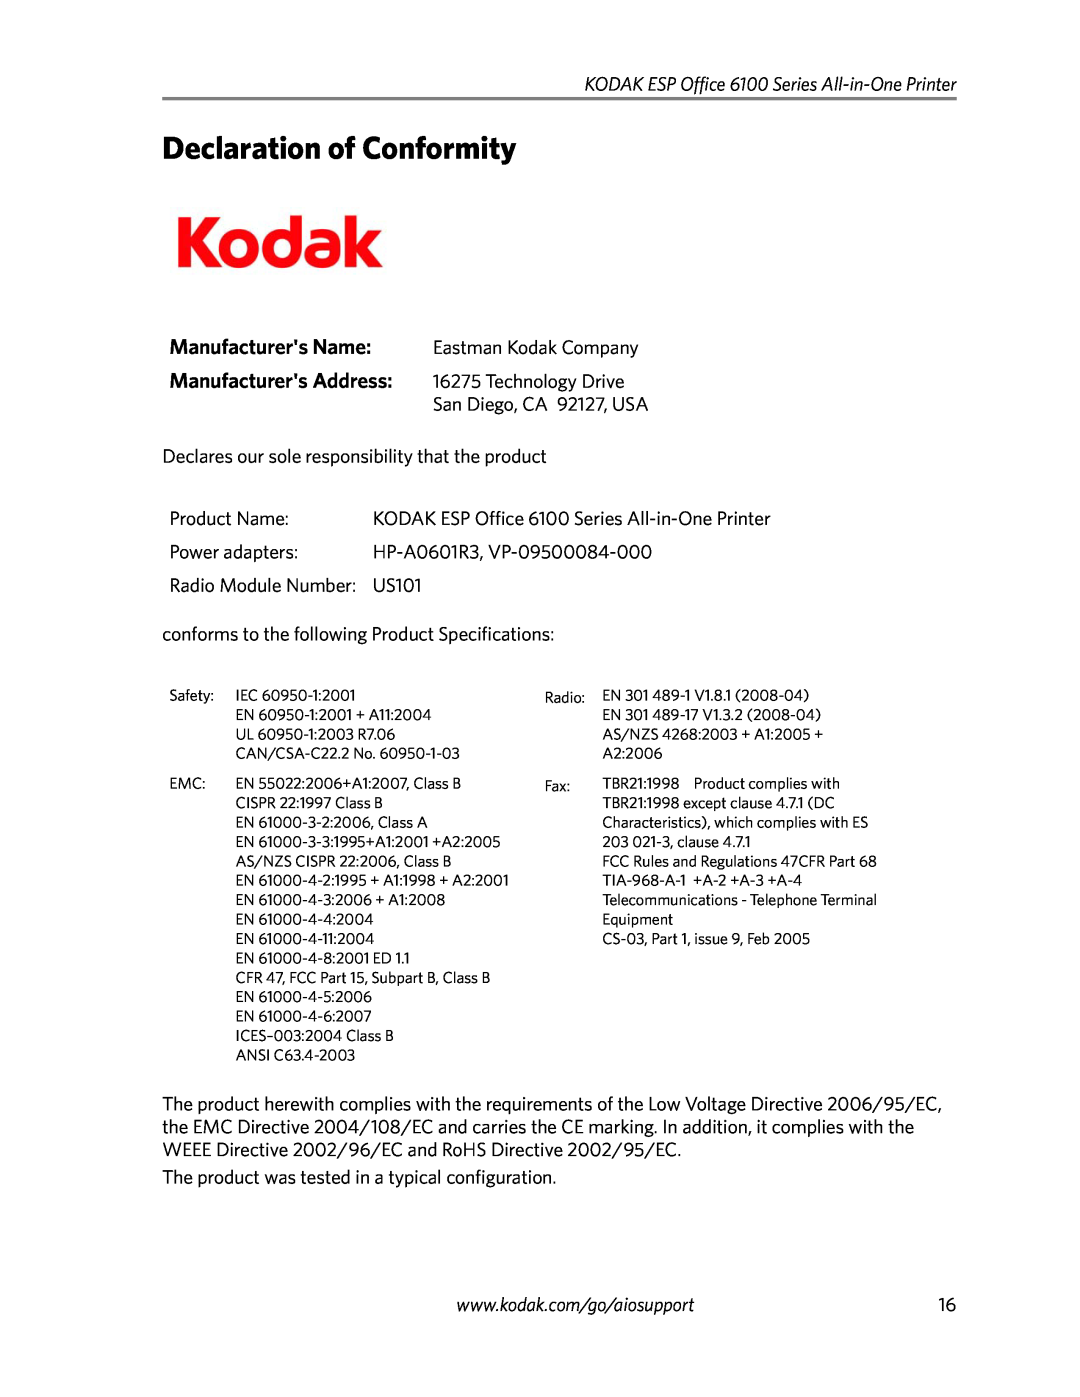 Kodak manual Declaration of Conformity, Manufacturers Address, KODAK ESP Office 6100 Series All-in-OnePrinter 